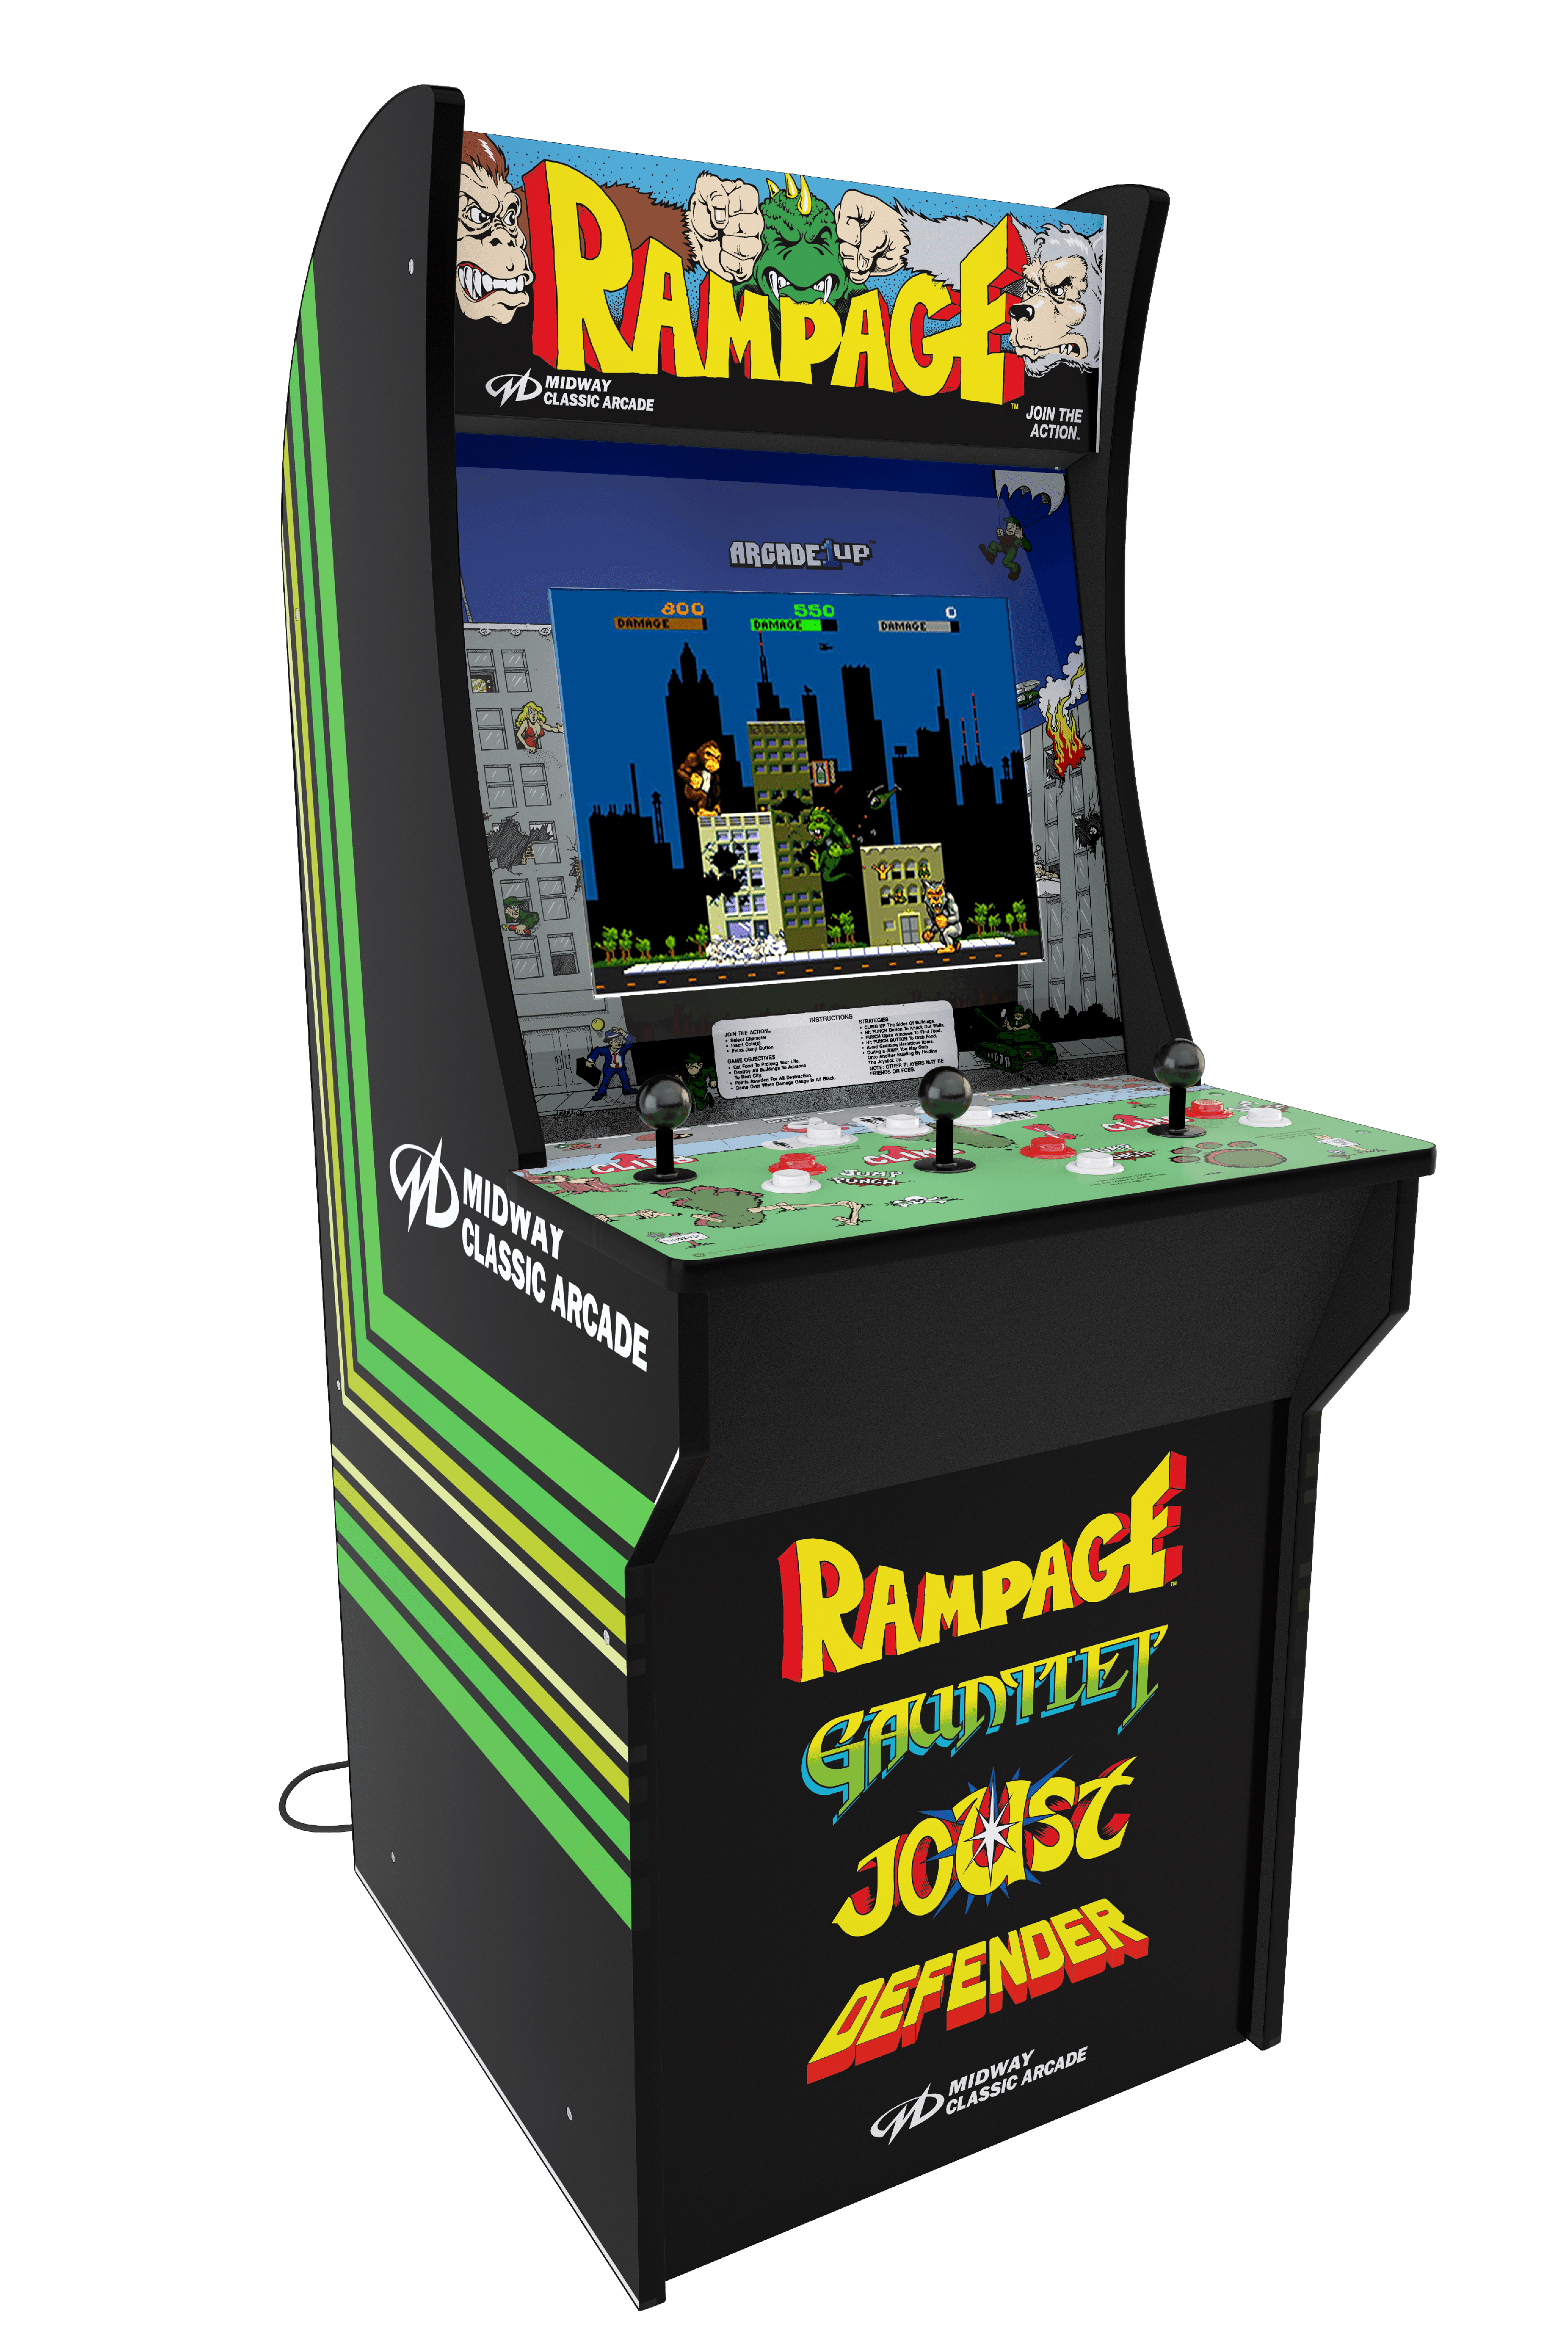 Midway Classic Arcade Classics Vol 1 Plug TV 3 Game Joust Gauntlet Defender for sale online 